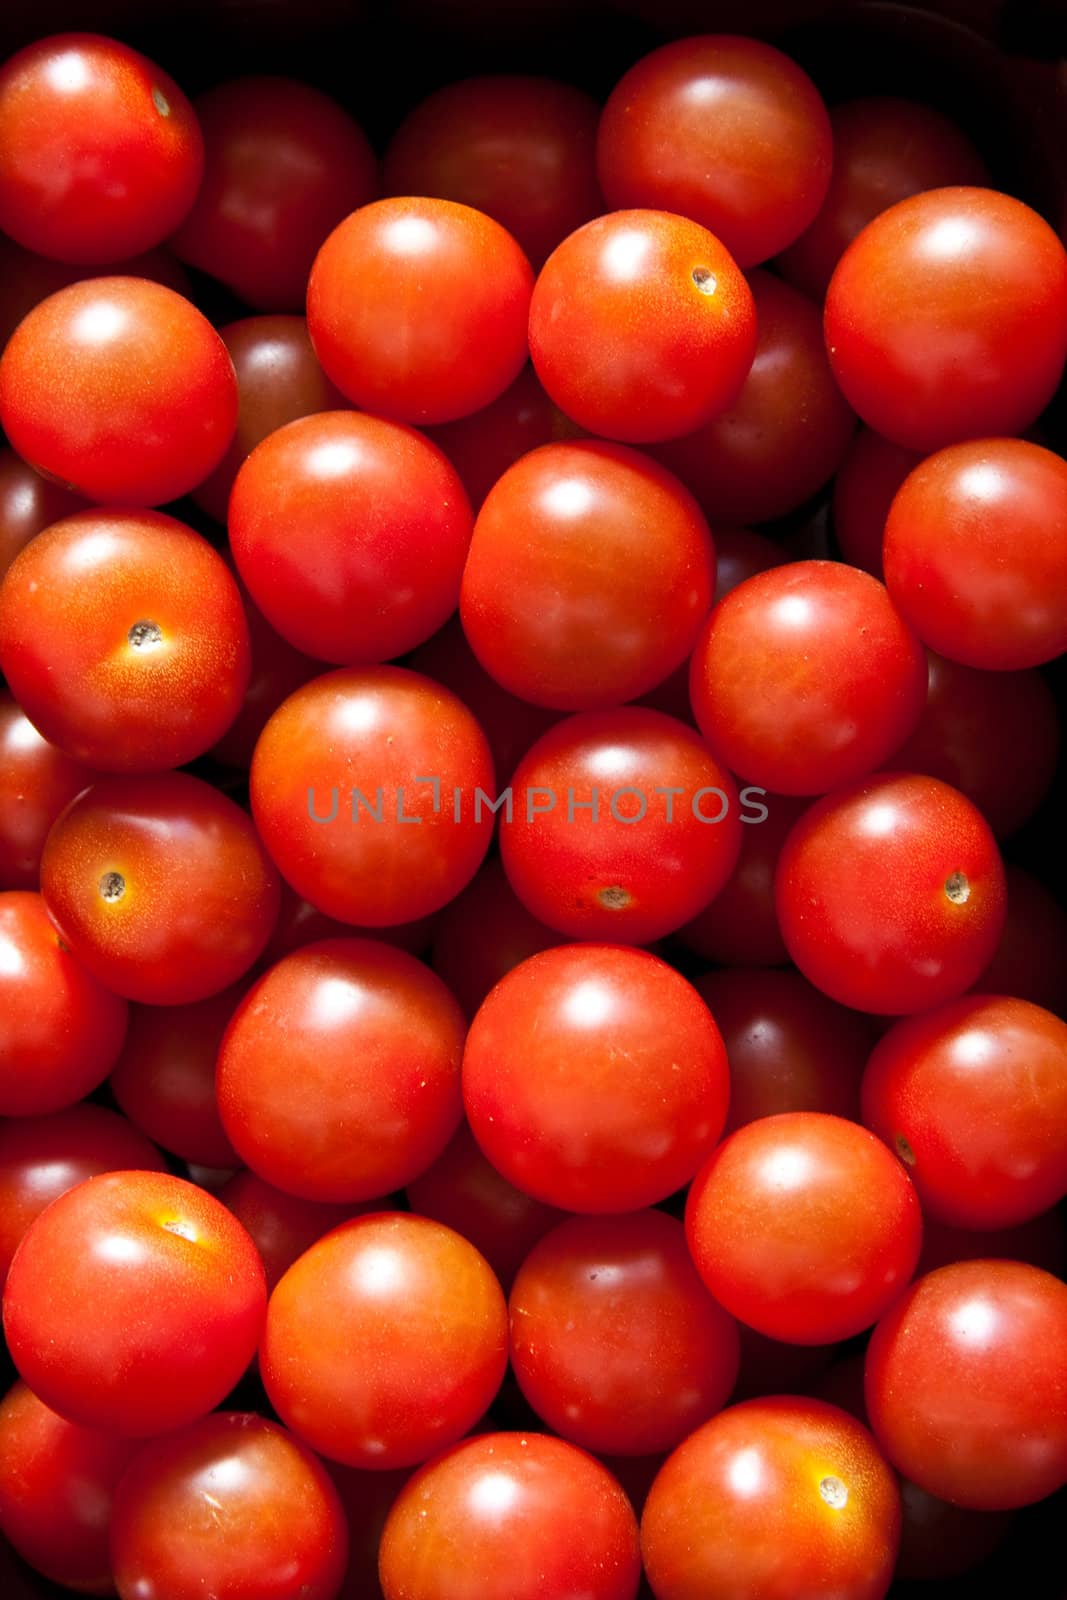 Baby tomatoes by raliand